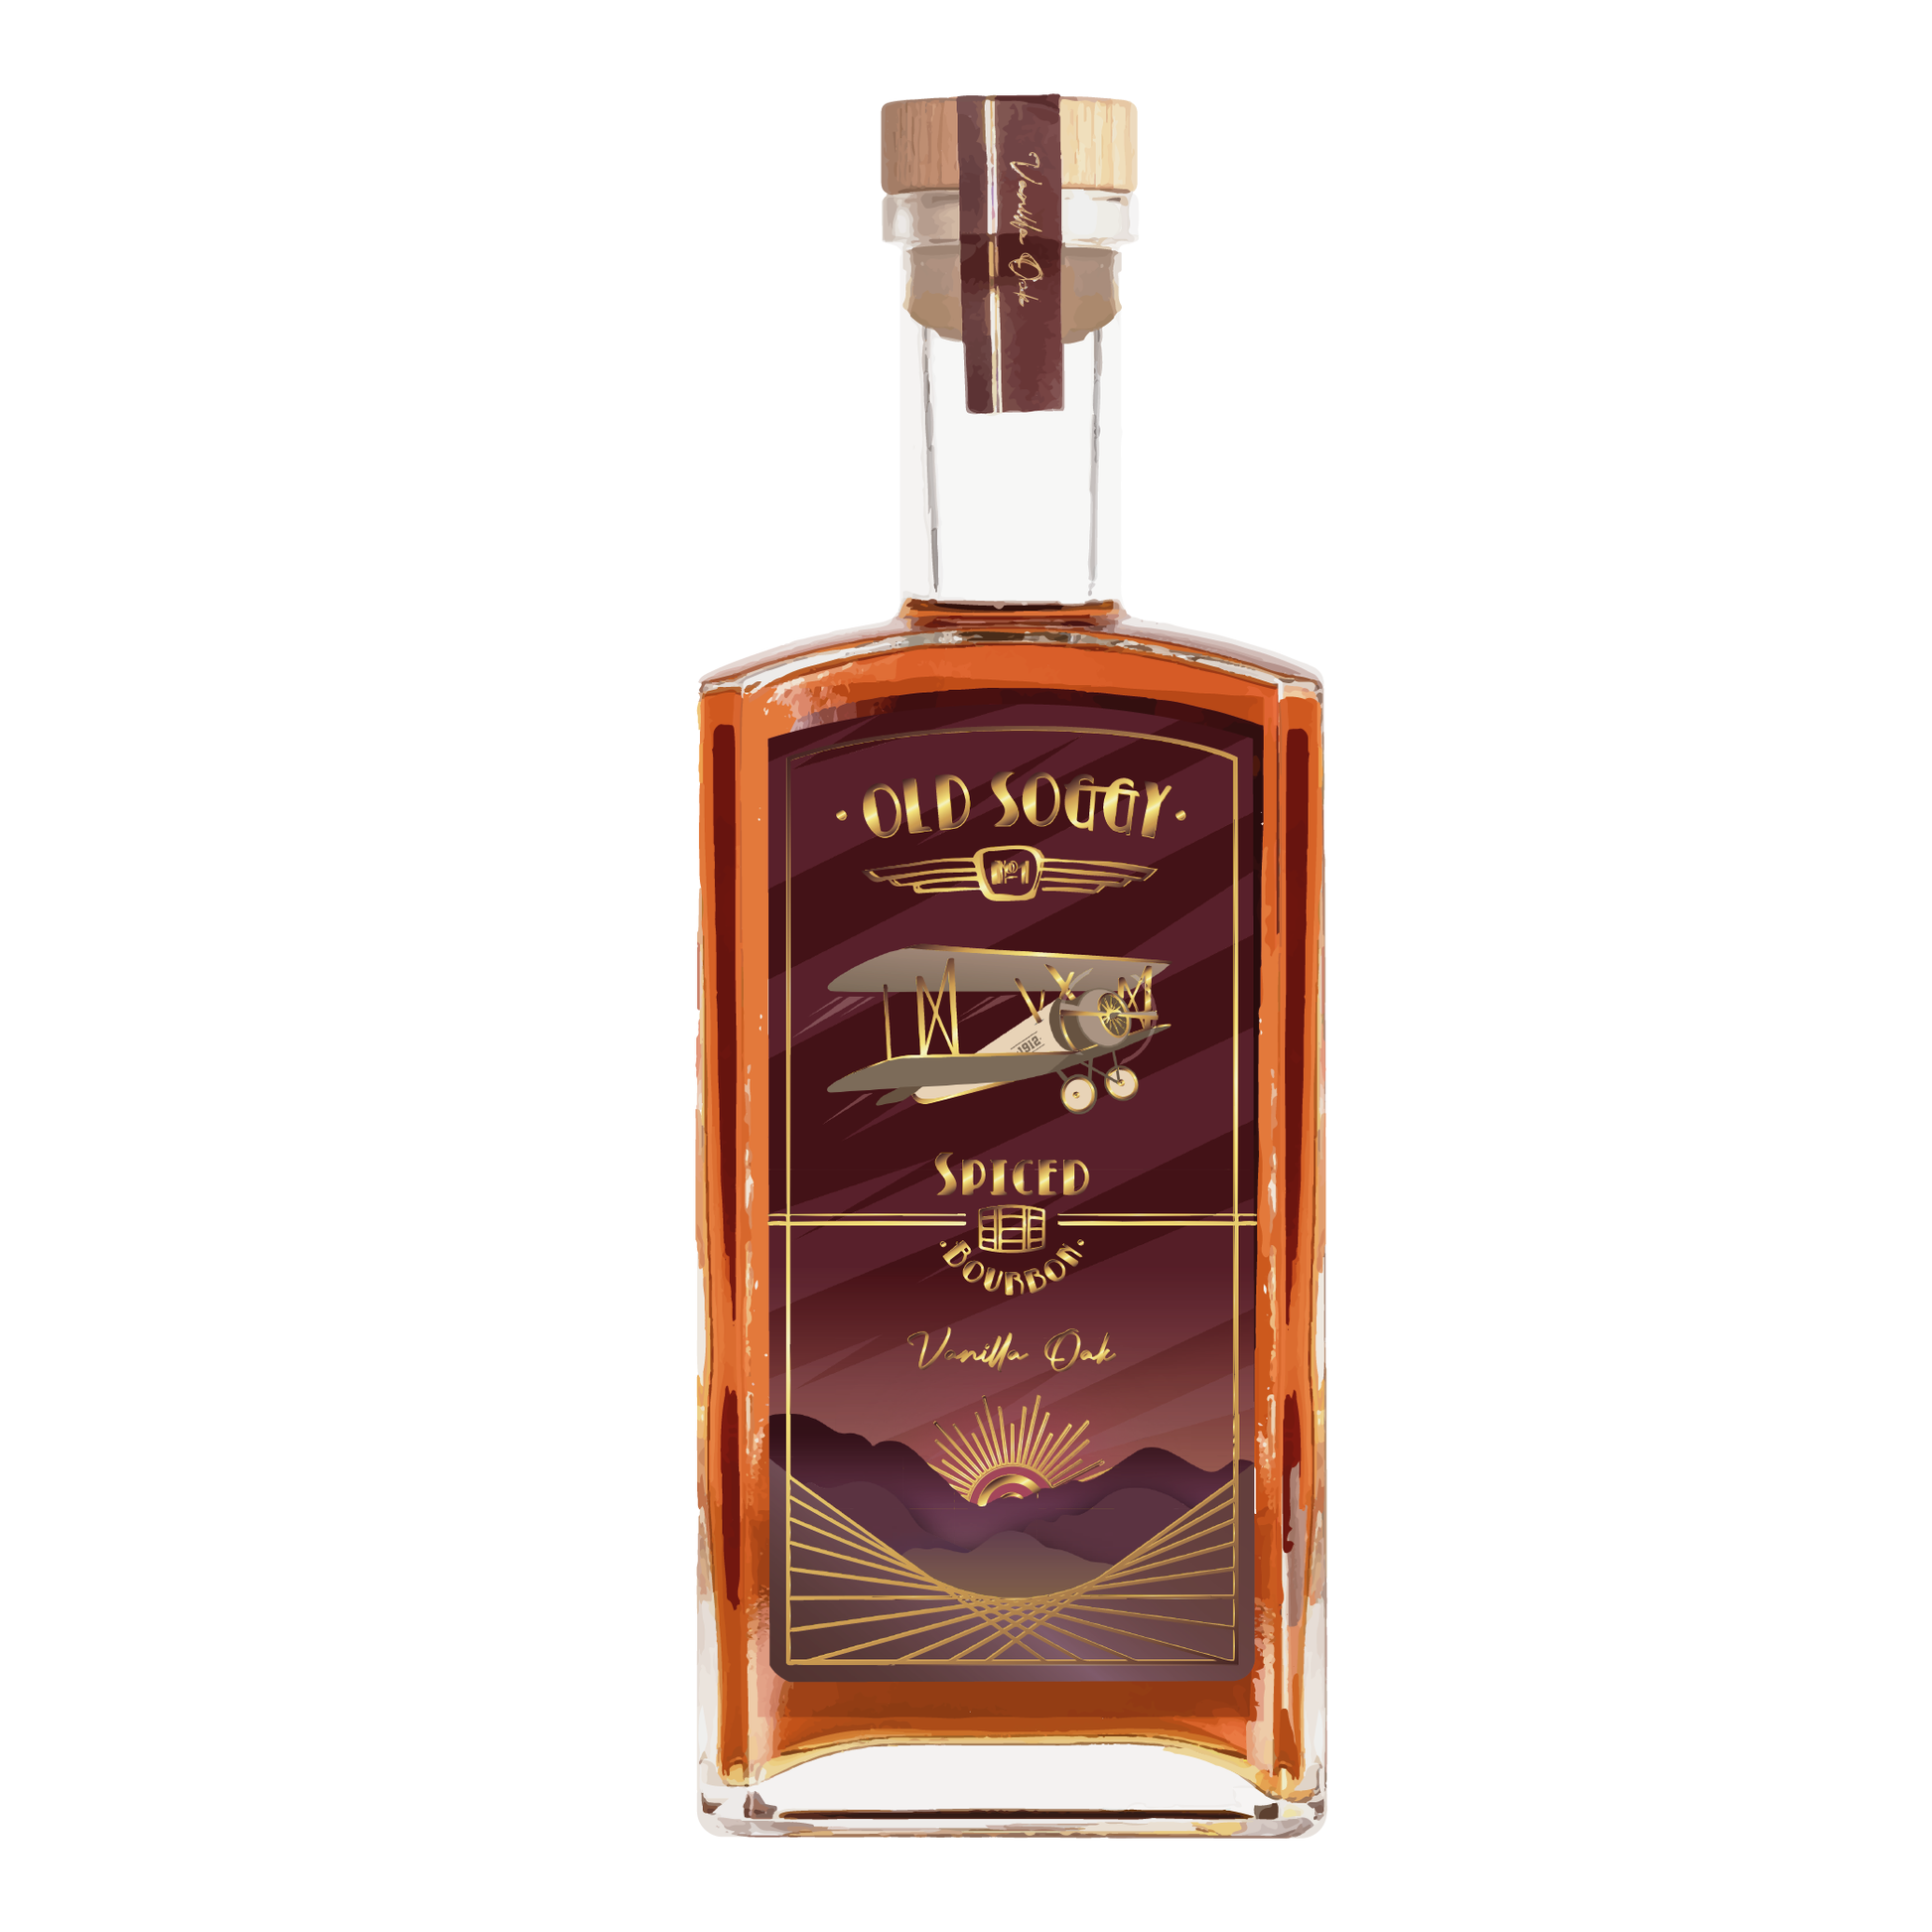 Old Soggy No.1 Spiced Bourbon Vanilla Oak Foto Flasche